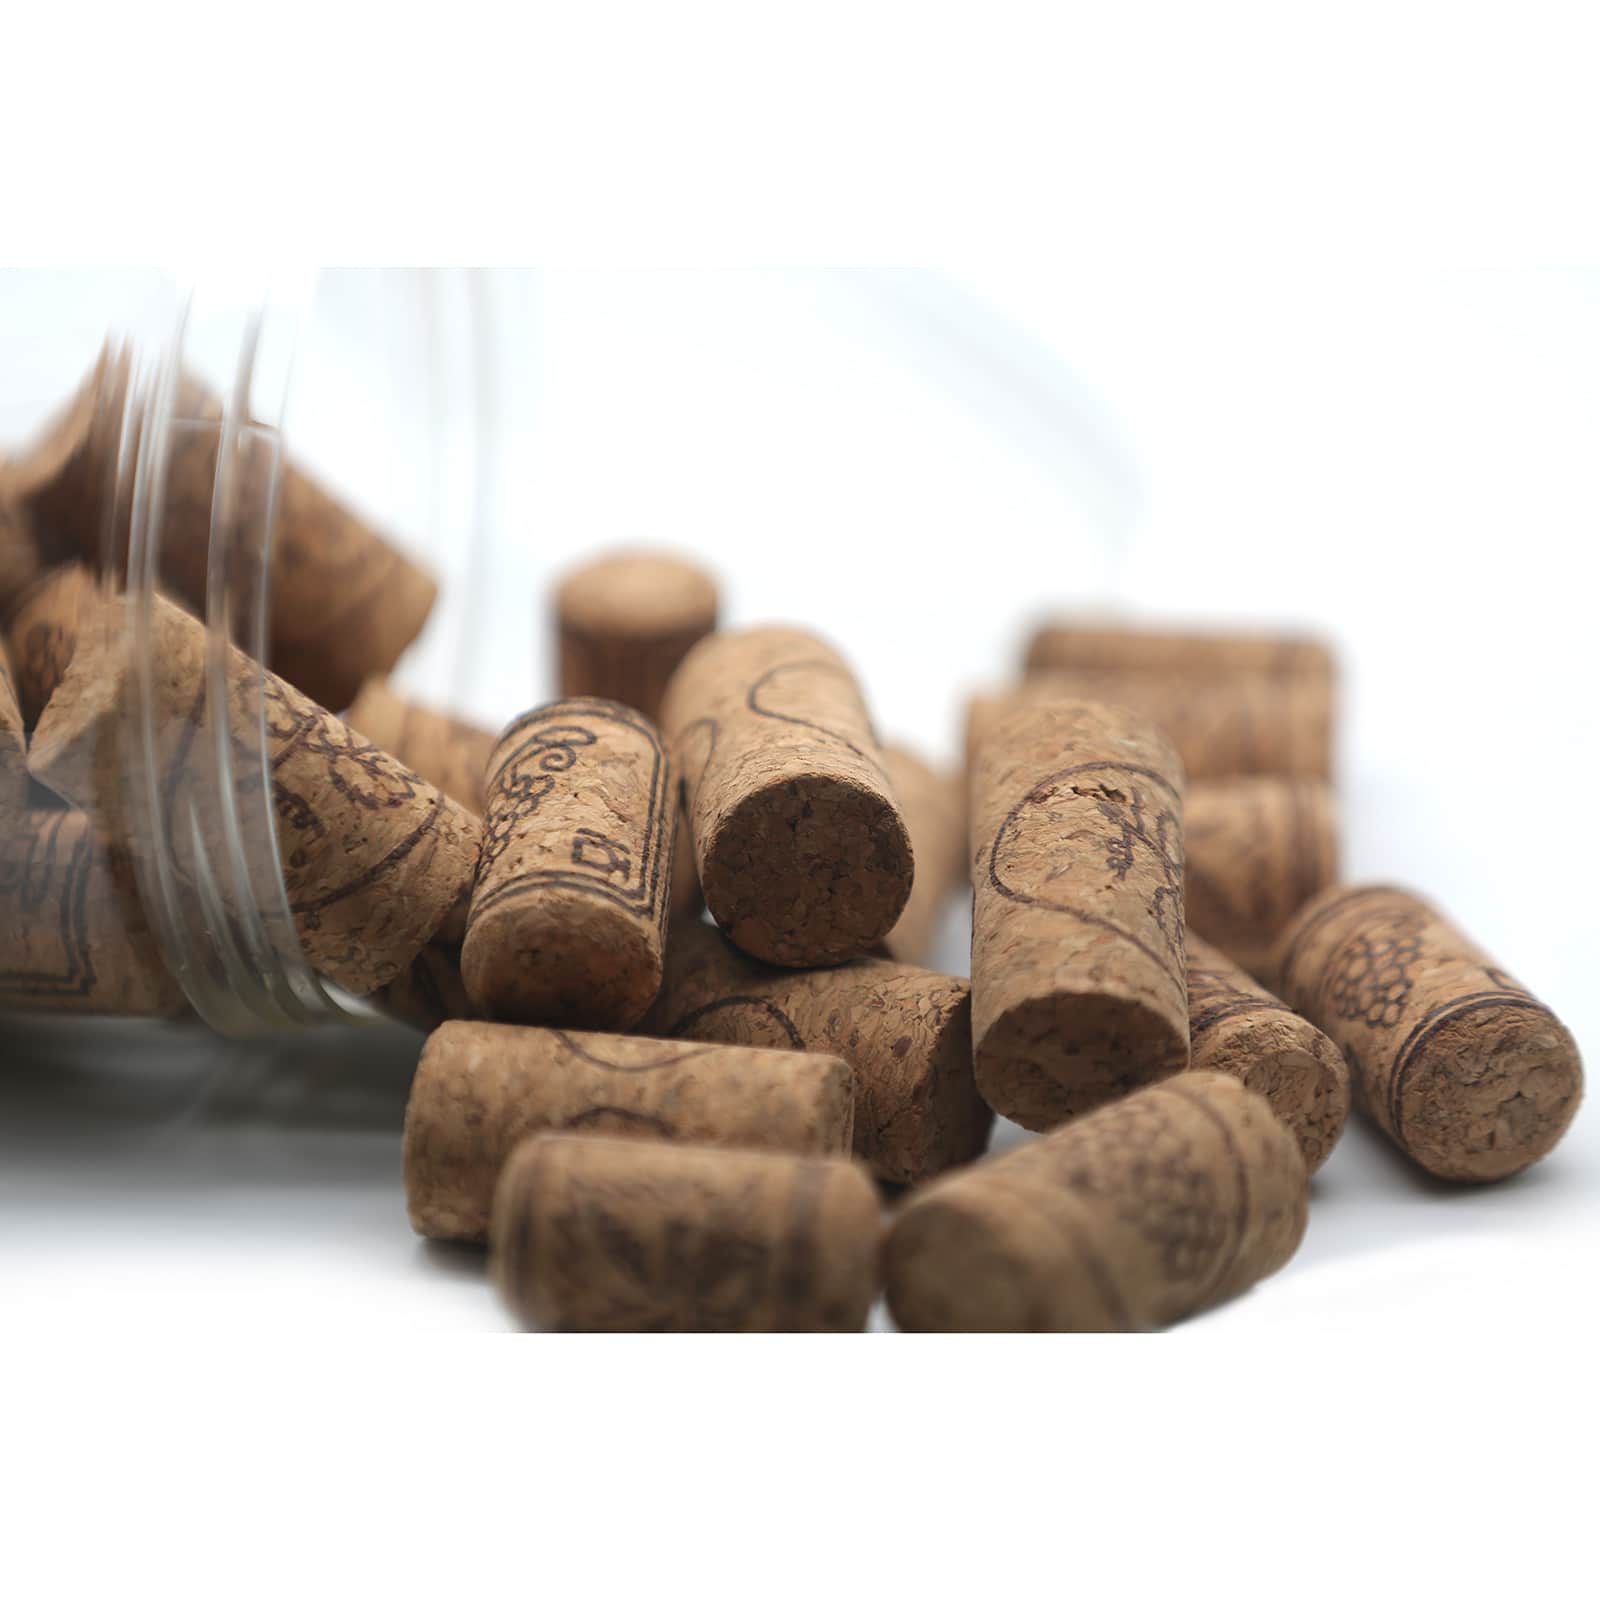 New Wine Corks - Wine Bottle Corks In Stock - Bulk discount